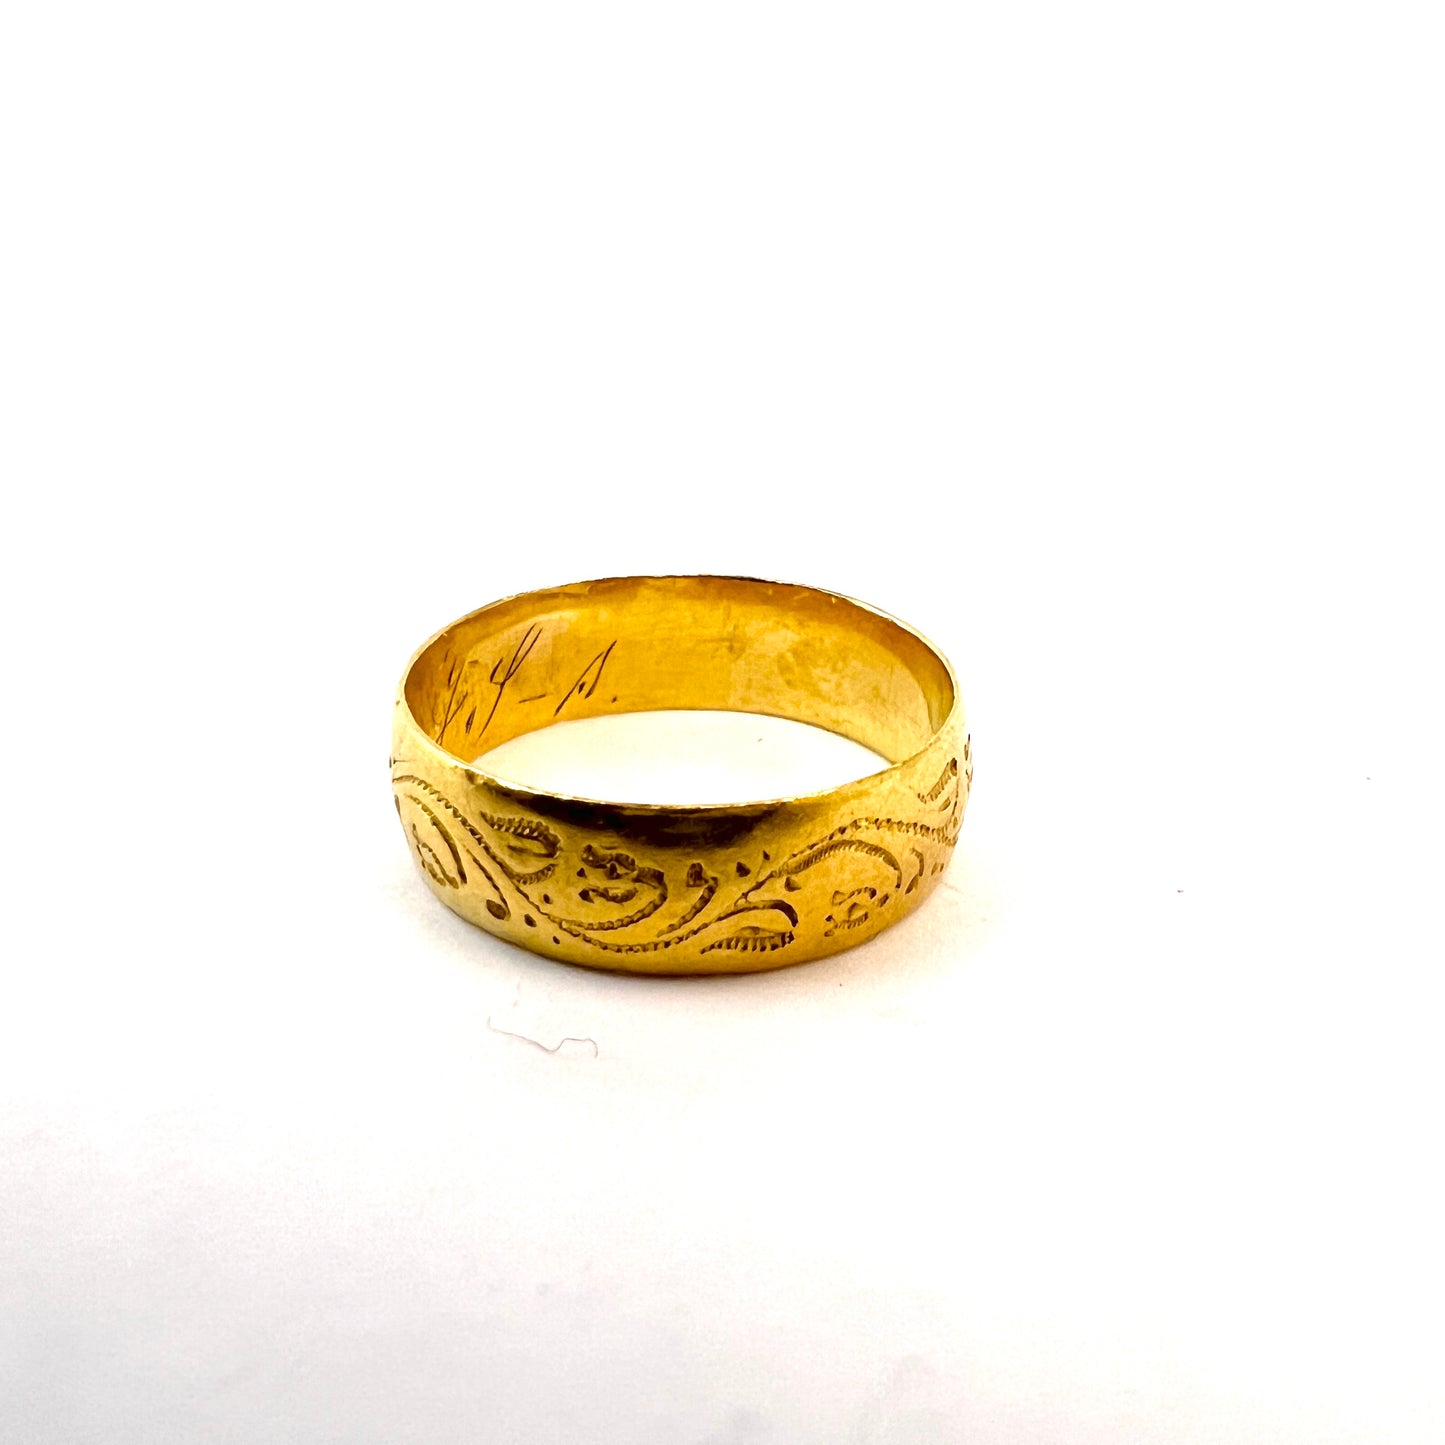 Graumann, Sweden 1895. Antique 23K Gold Wedding Band Ring.